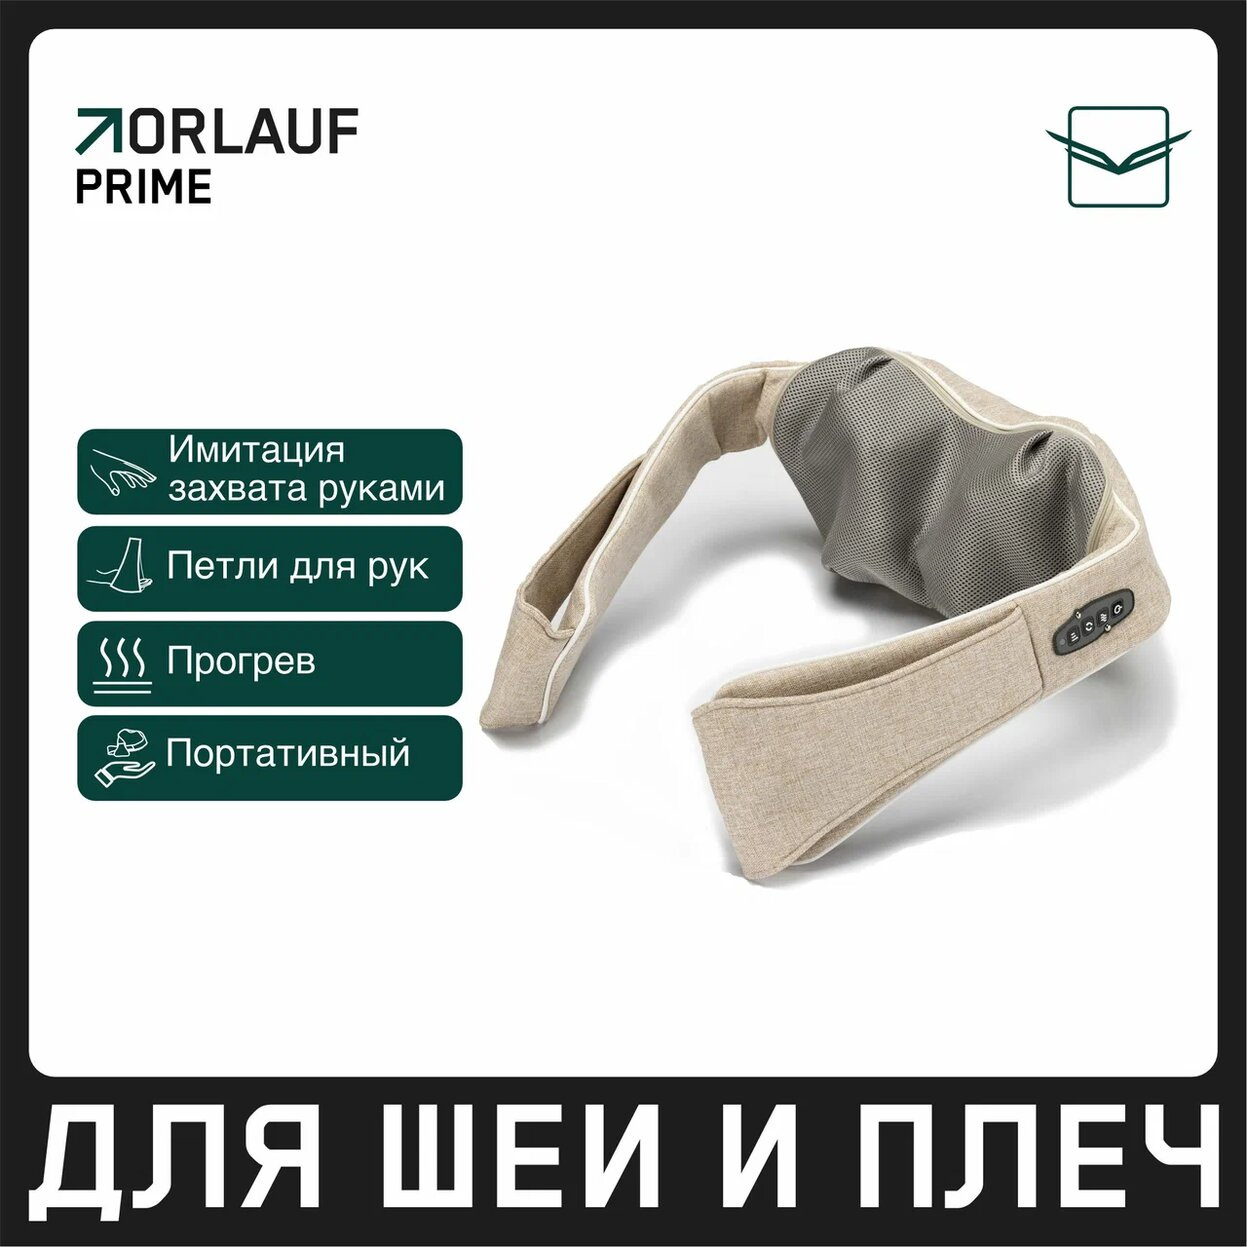 Orlauf Prime из каталога массажеров в Екатеринбурге по цене 11900 ₽